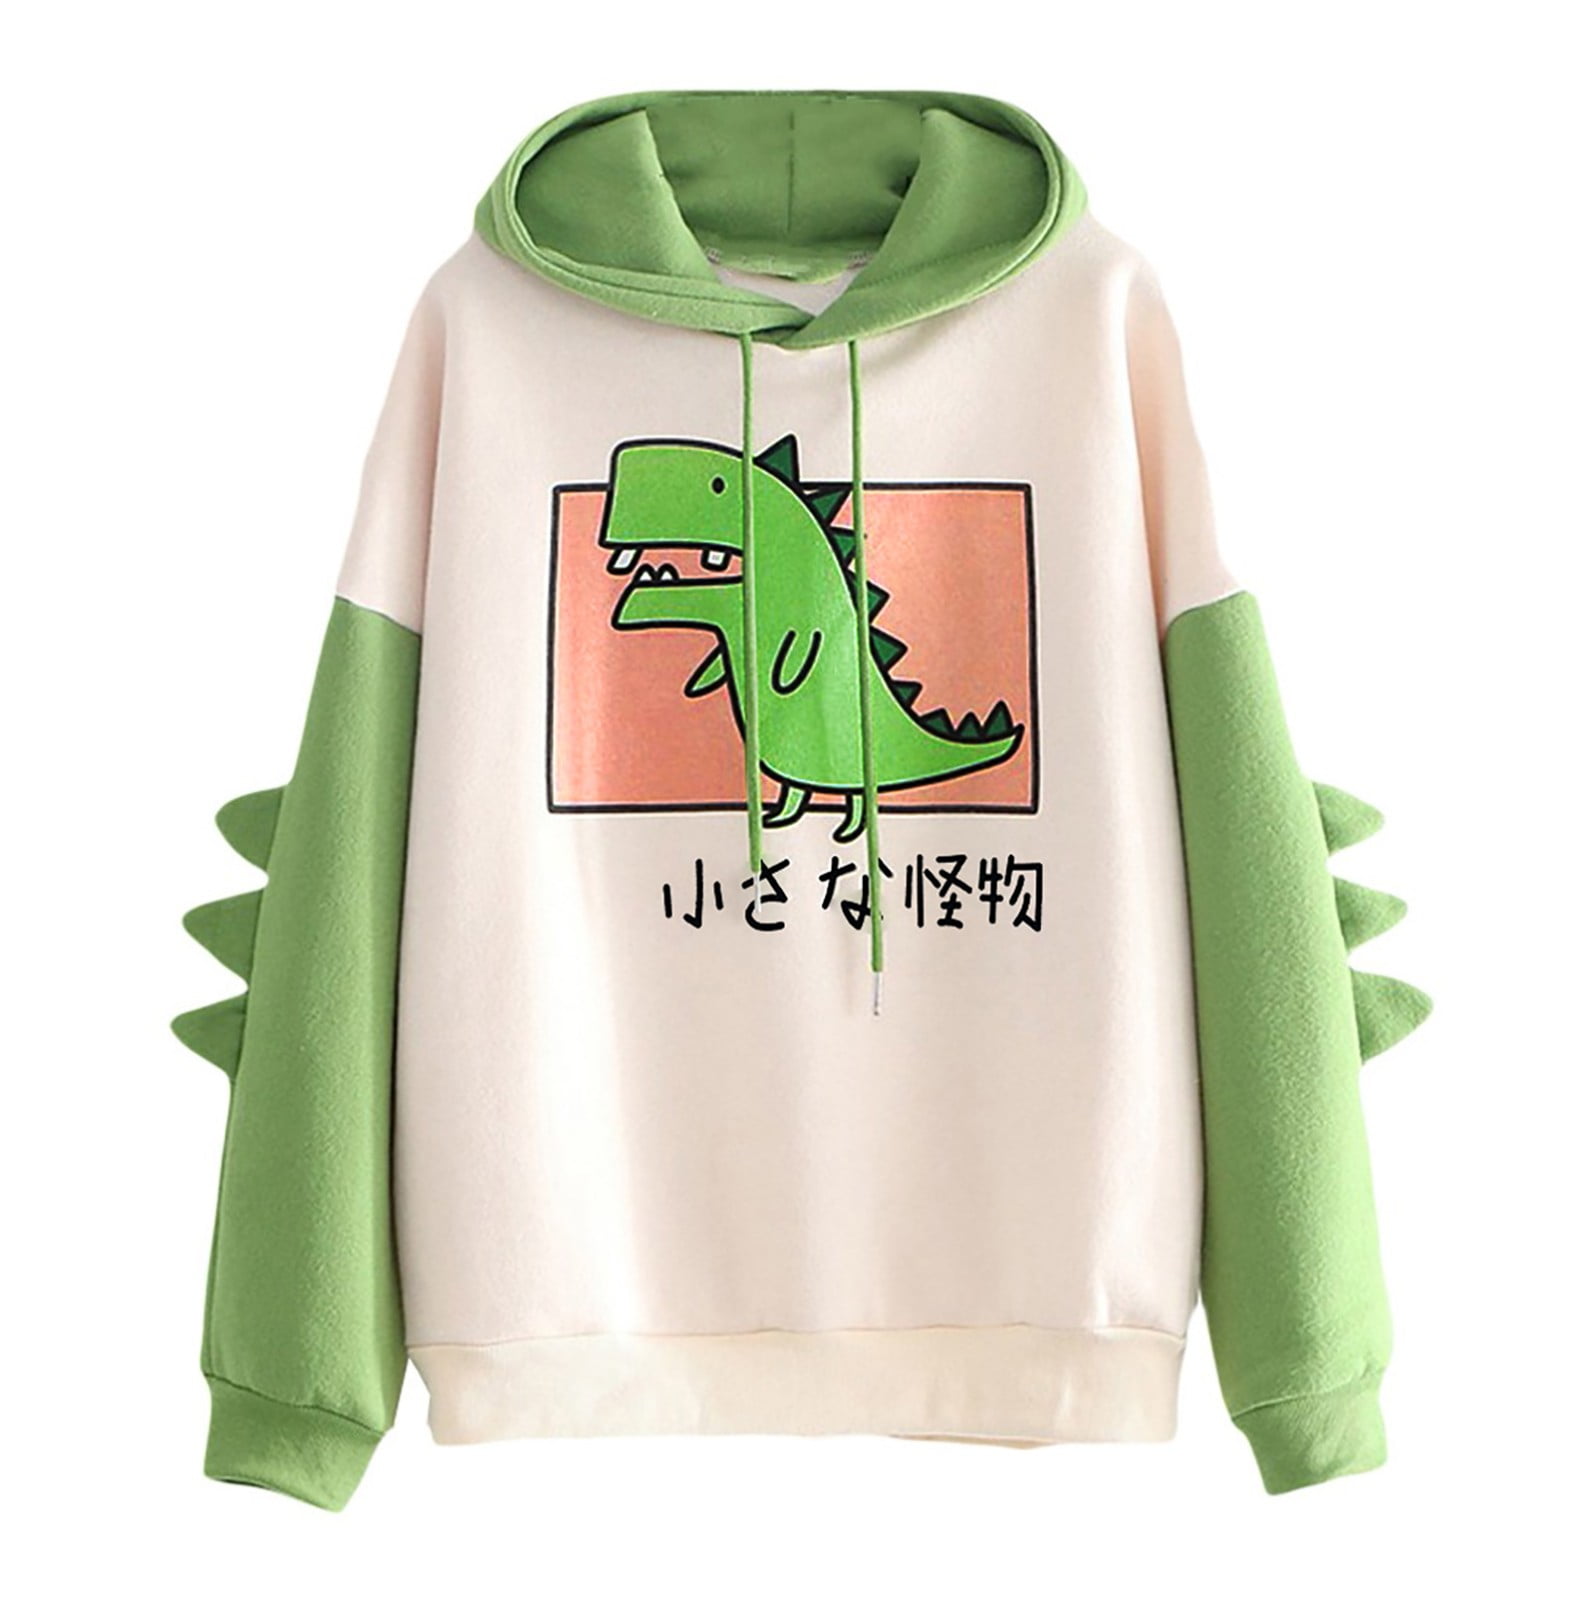 TAYBAGH Women's Cute Hoodies for Teen Girl Long Sleeve Kawaii Dinosaur Print Top Casual Graphic Tees Animal Hoodie Shirt 